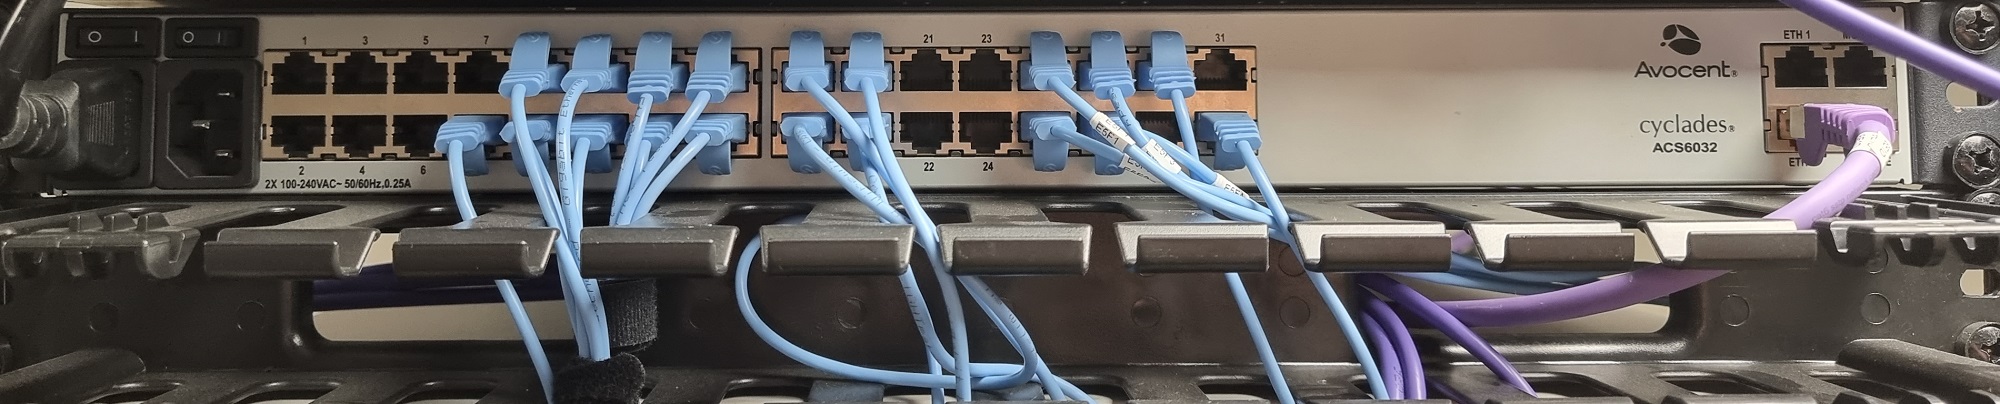 Avocent Acs 6032 Blue Utp Cables